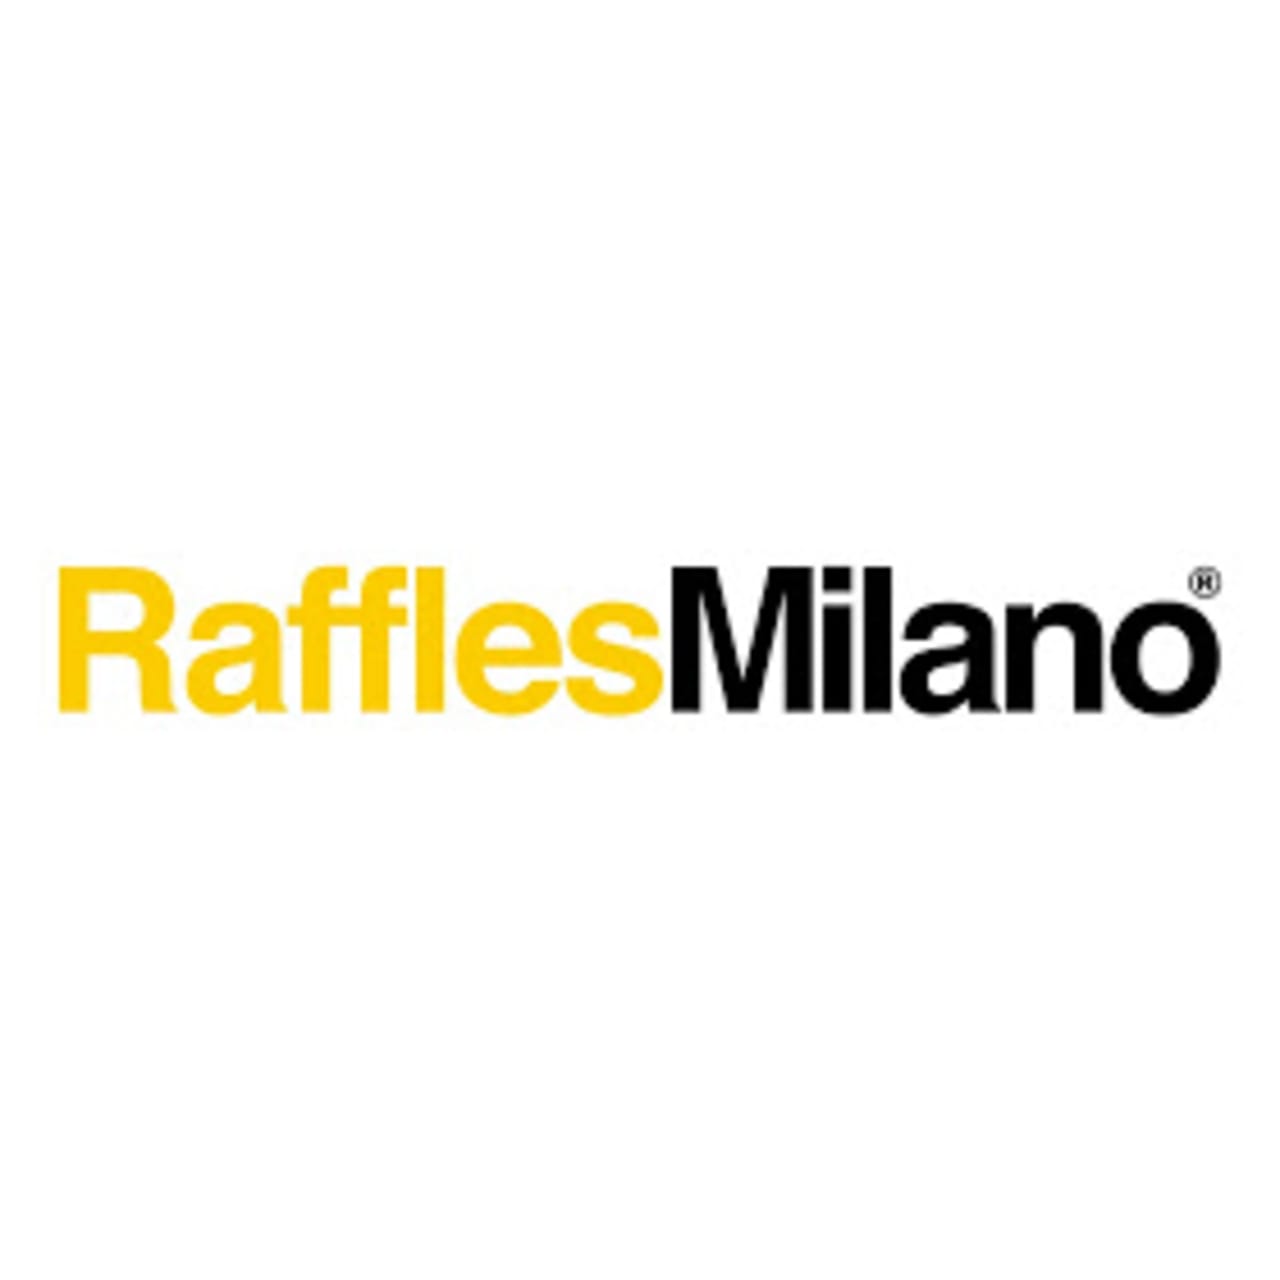 Raffles Milan - International Fashion and Design School Corso triennale in Product Design